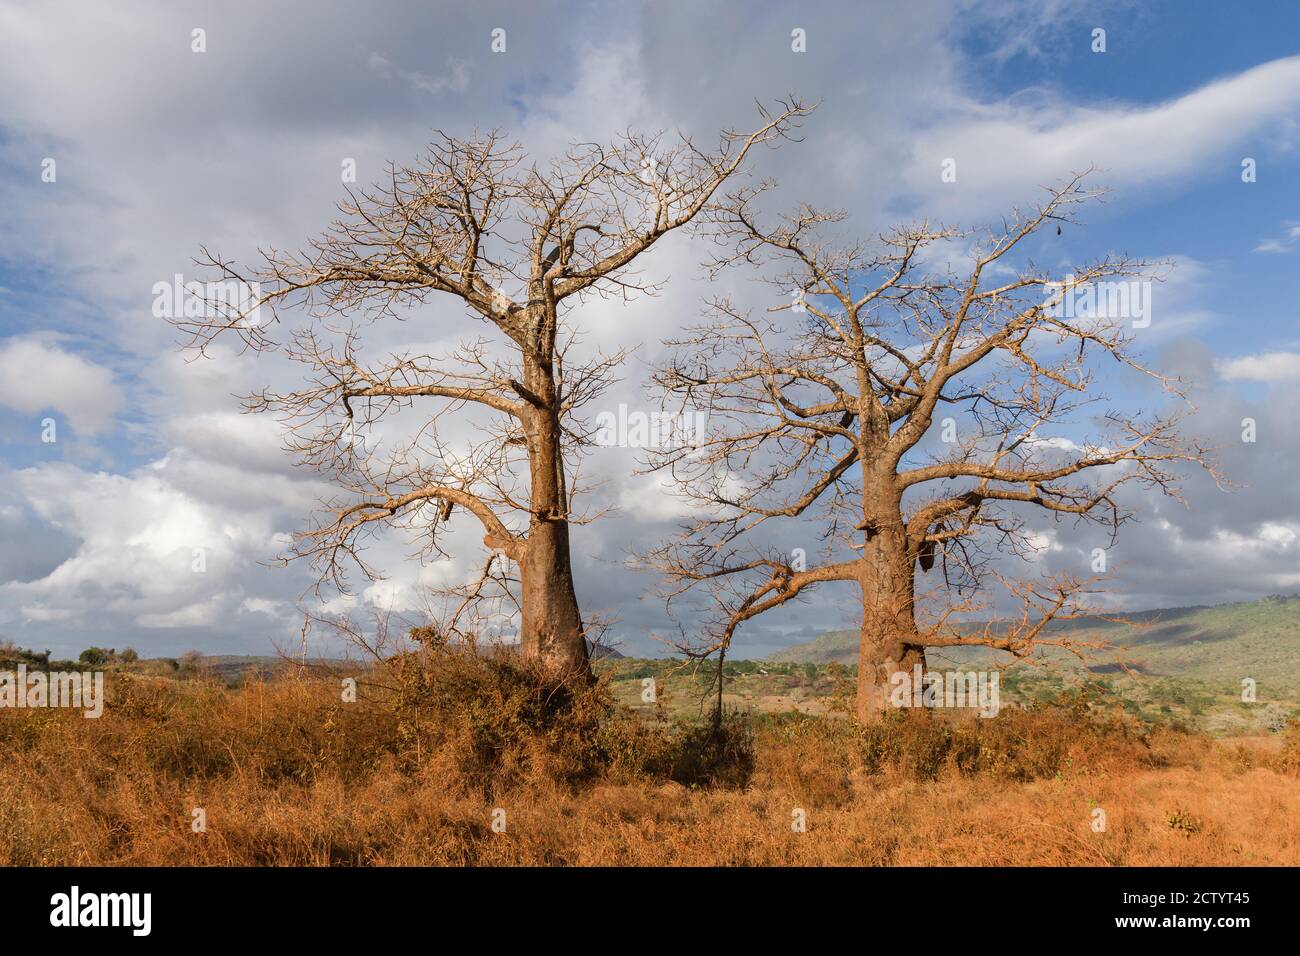 Two large baobab trees (Adansonia digitata) in afternoon light, Kenya, East Africa Stock Photo